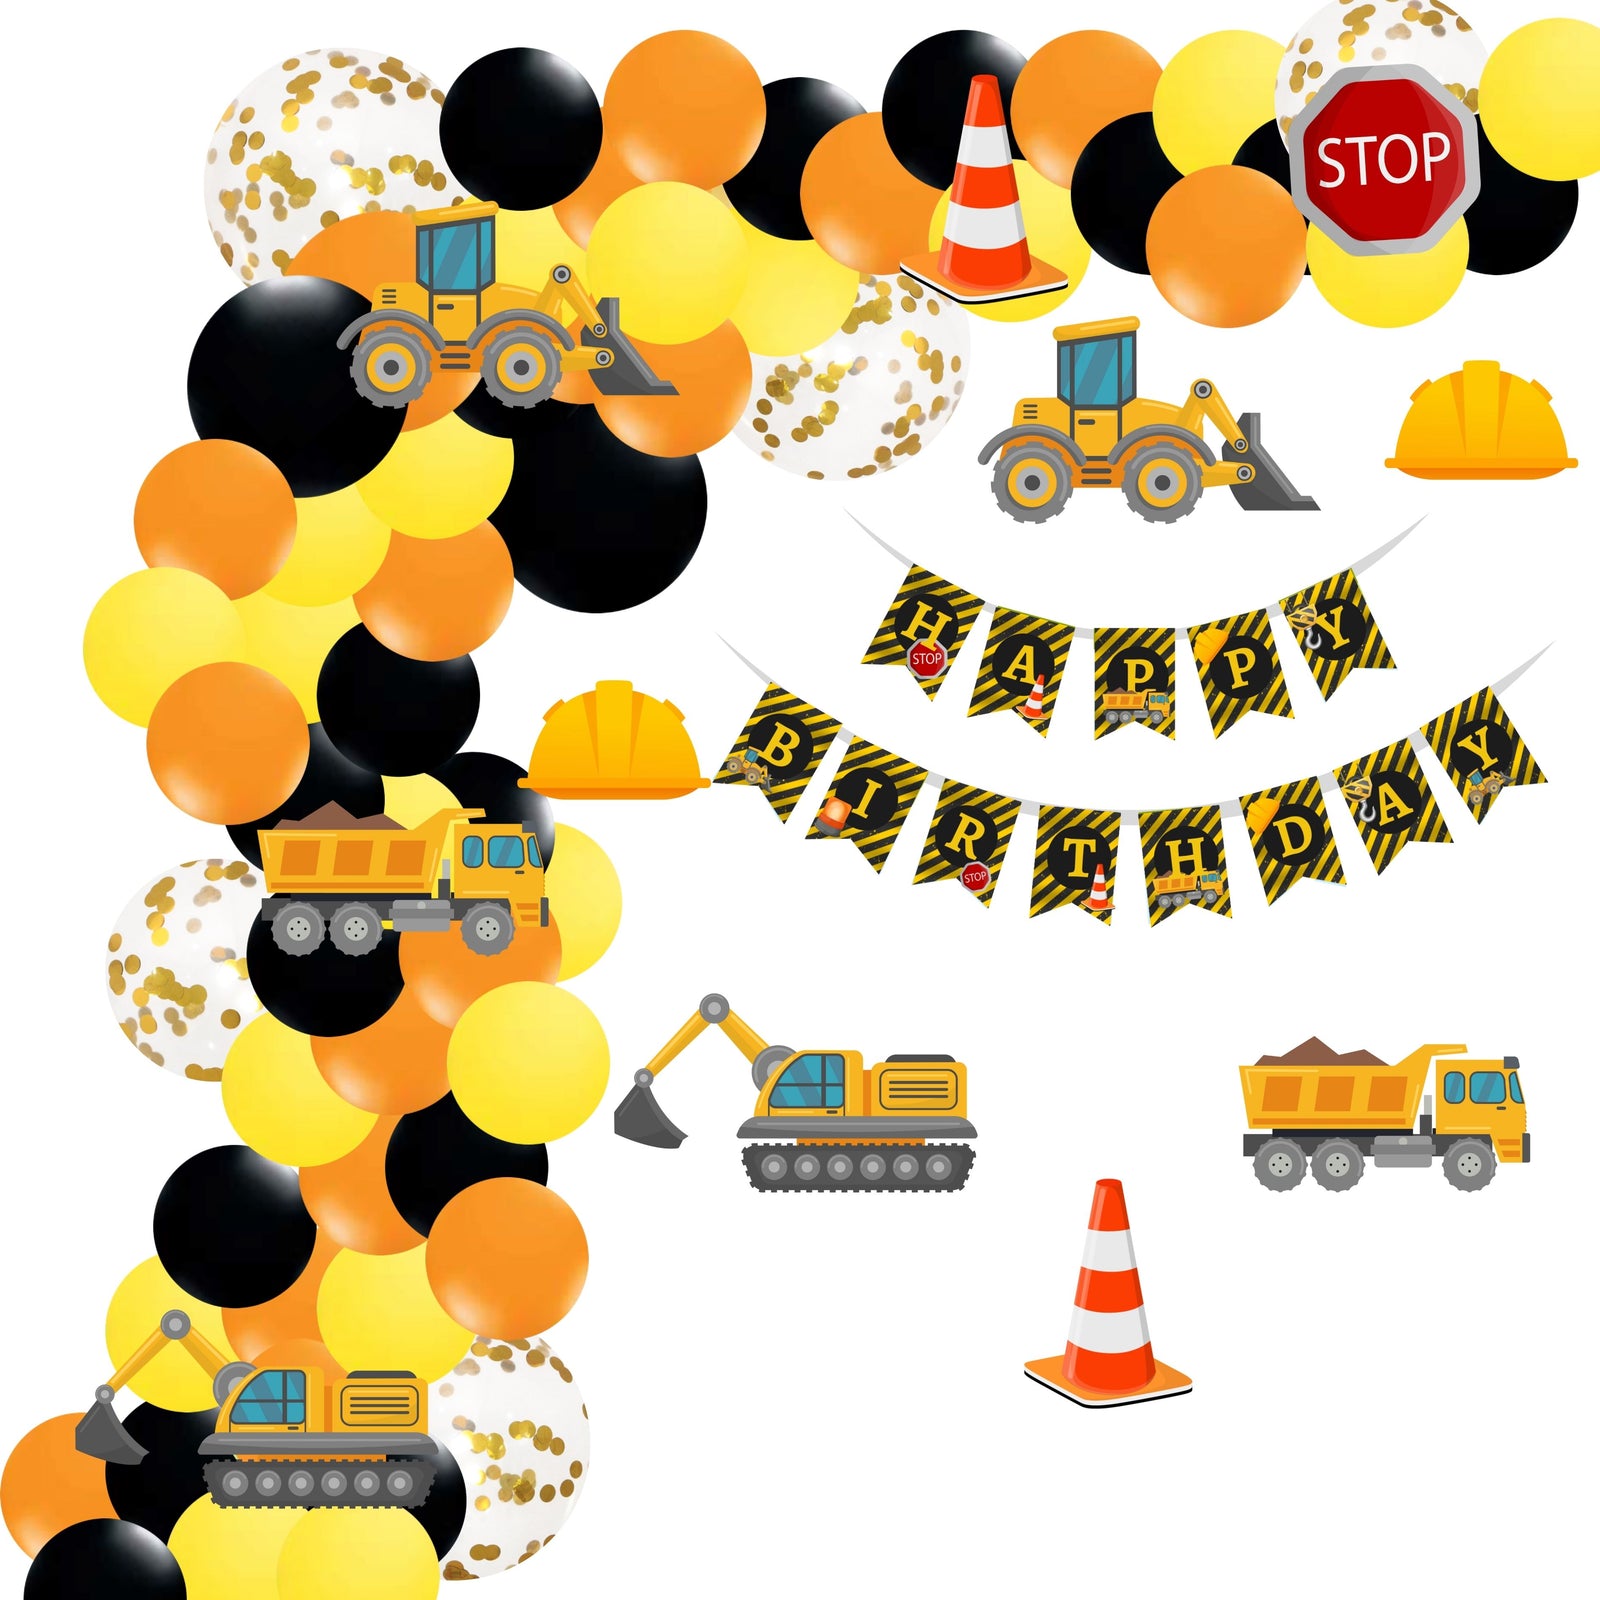 Construction Theme Birthday Balloon Decoration DIY Kit (80Pcs)